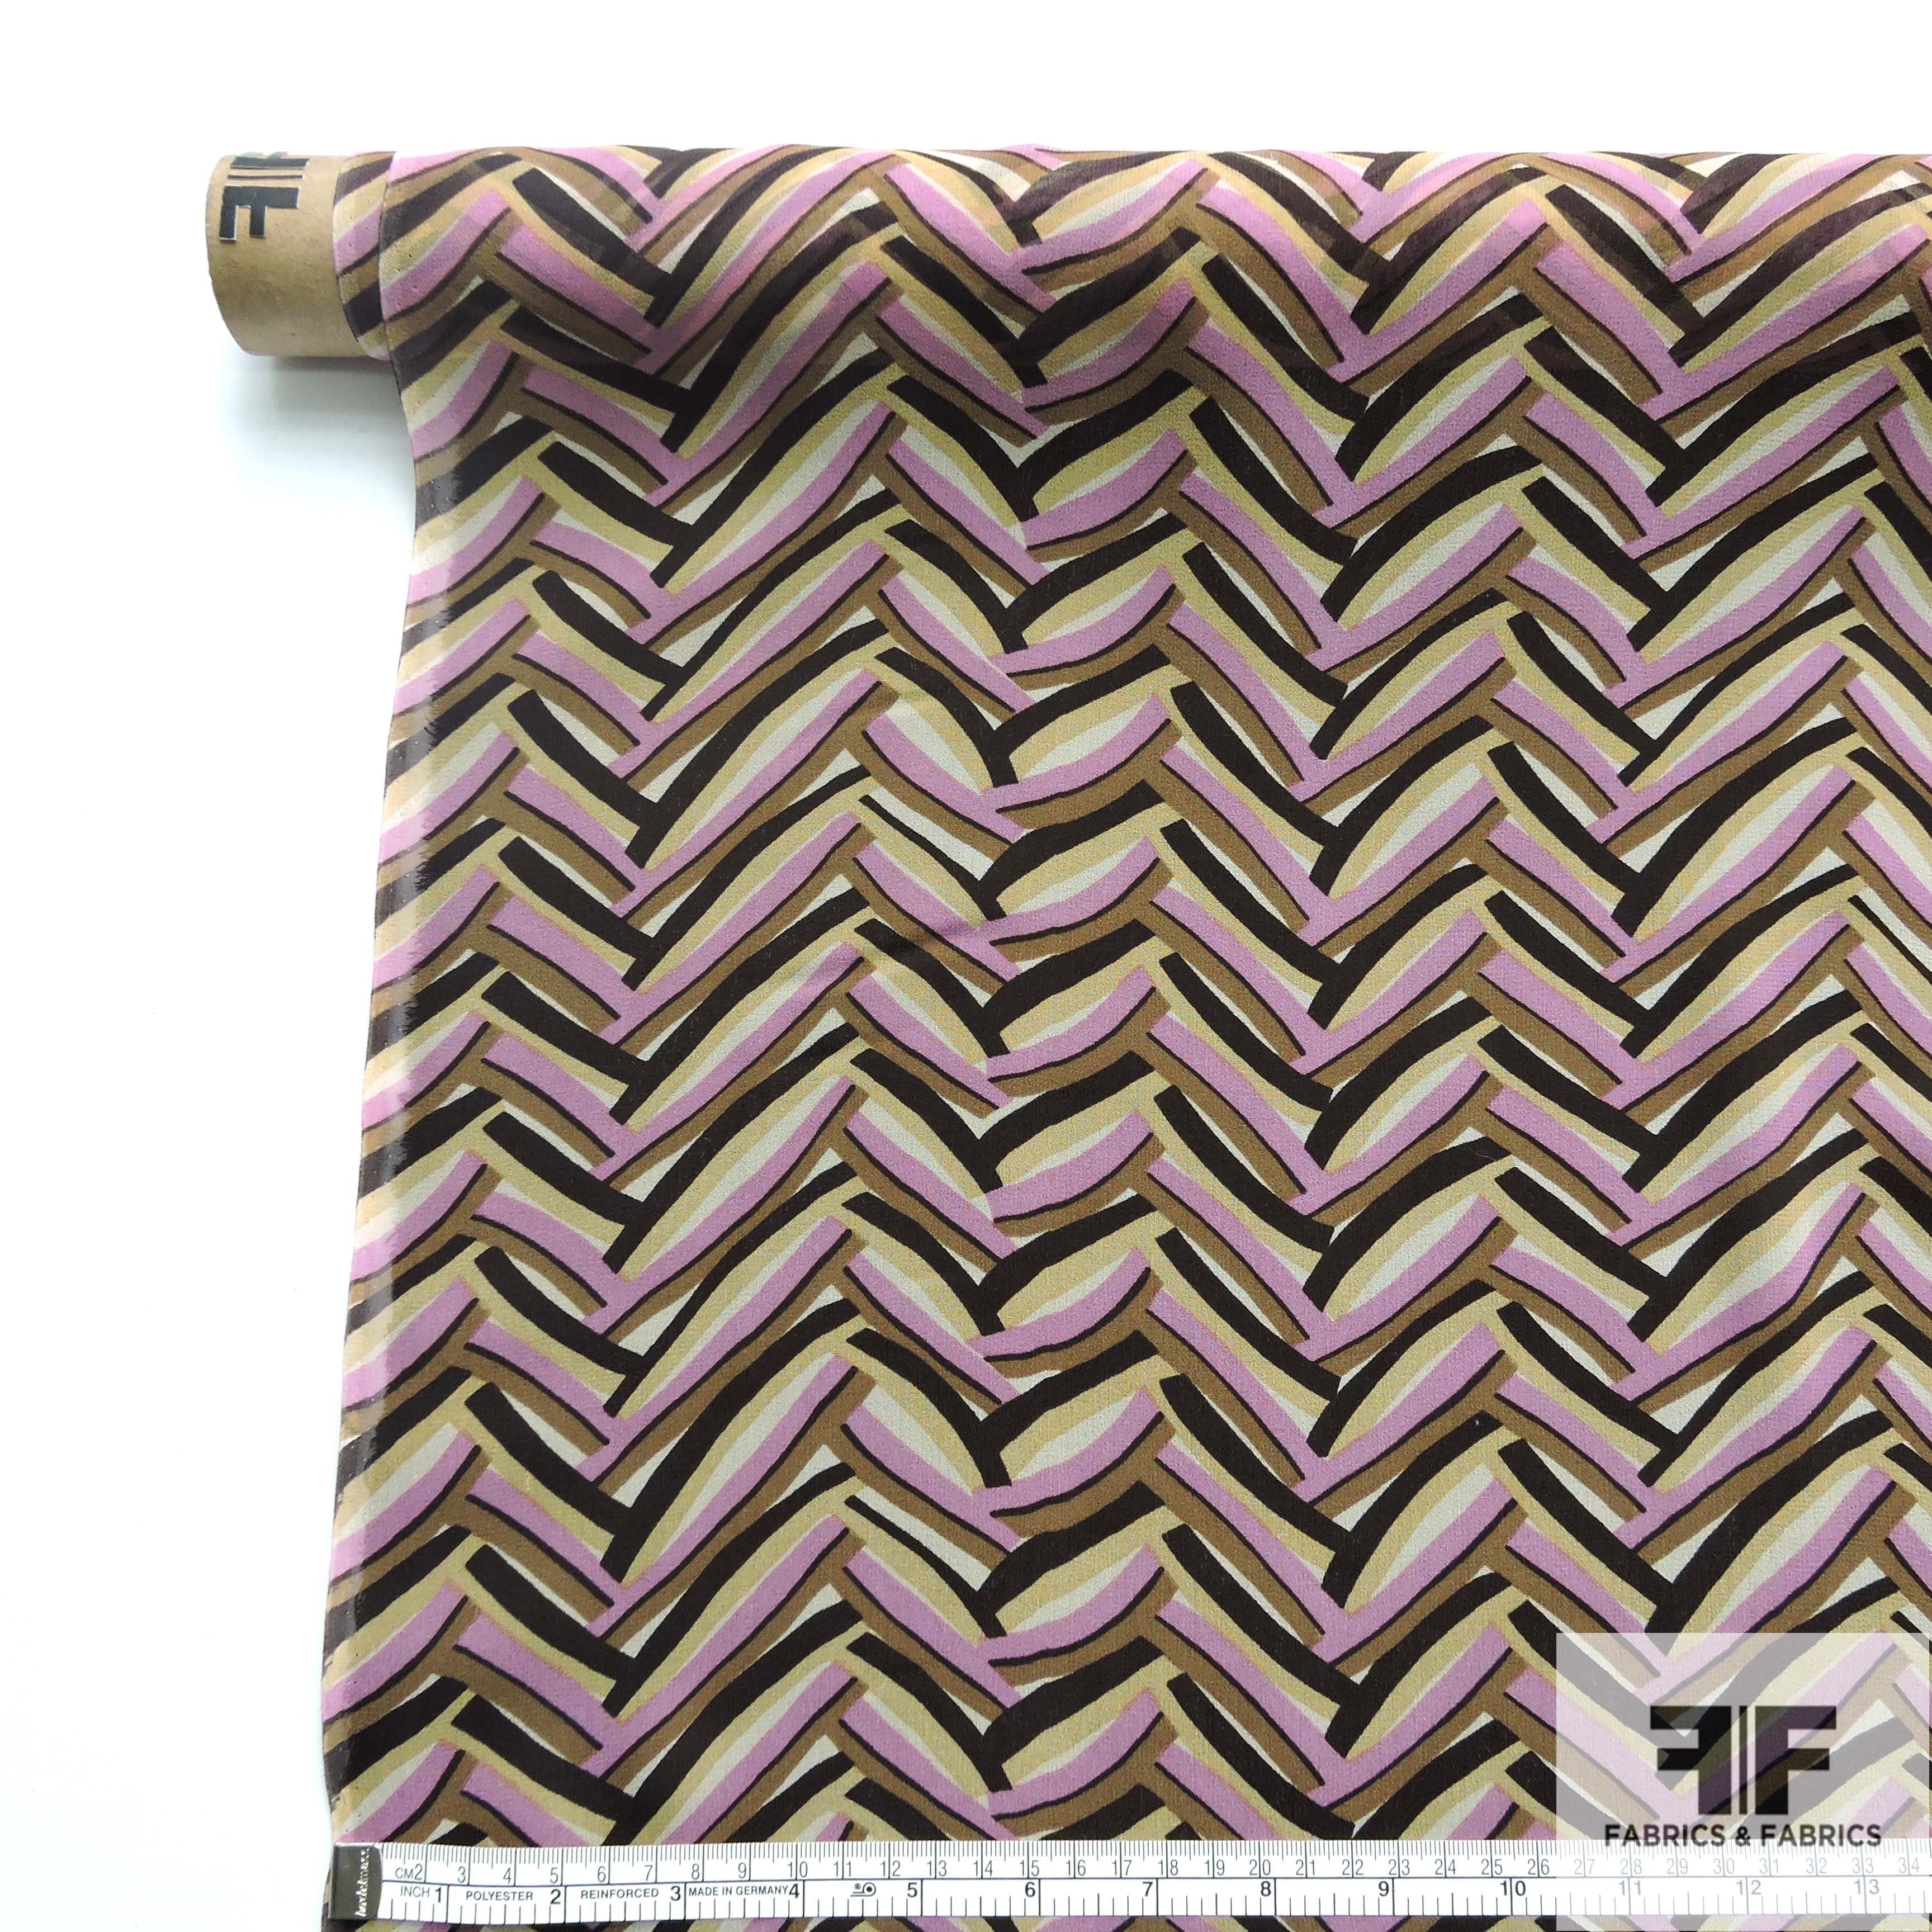 Chevron Printed Silk Chiffon - Multicolor - Fabrics & Fabrics NY